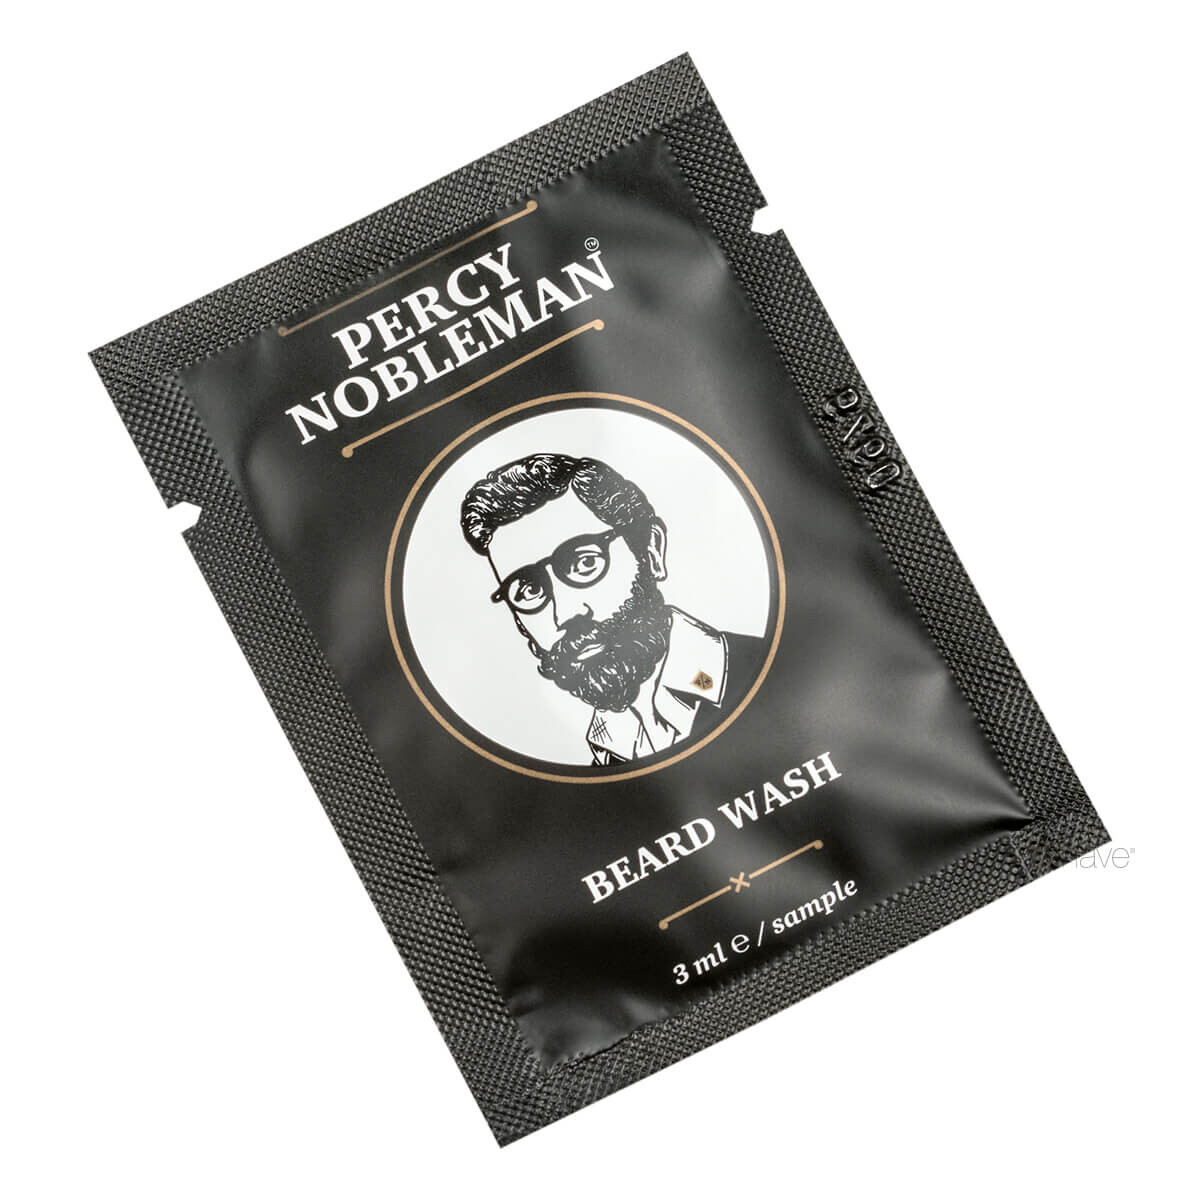 Se Percy Nobleman Beard Wash, SAMPLE, 3 ml. hos Proshave